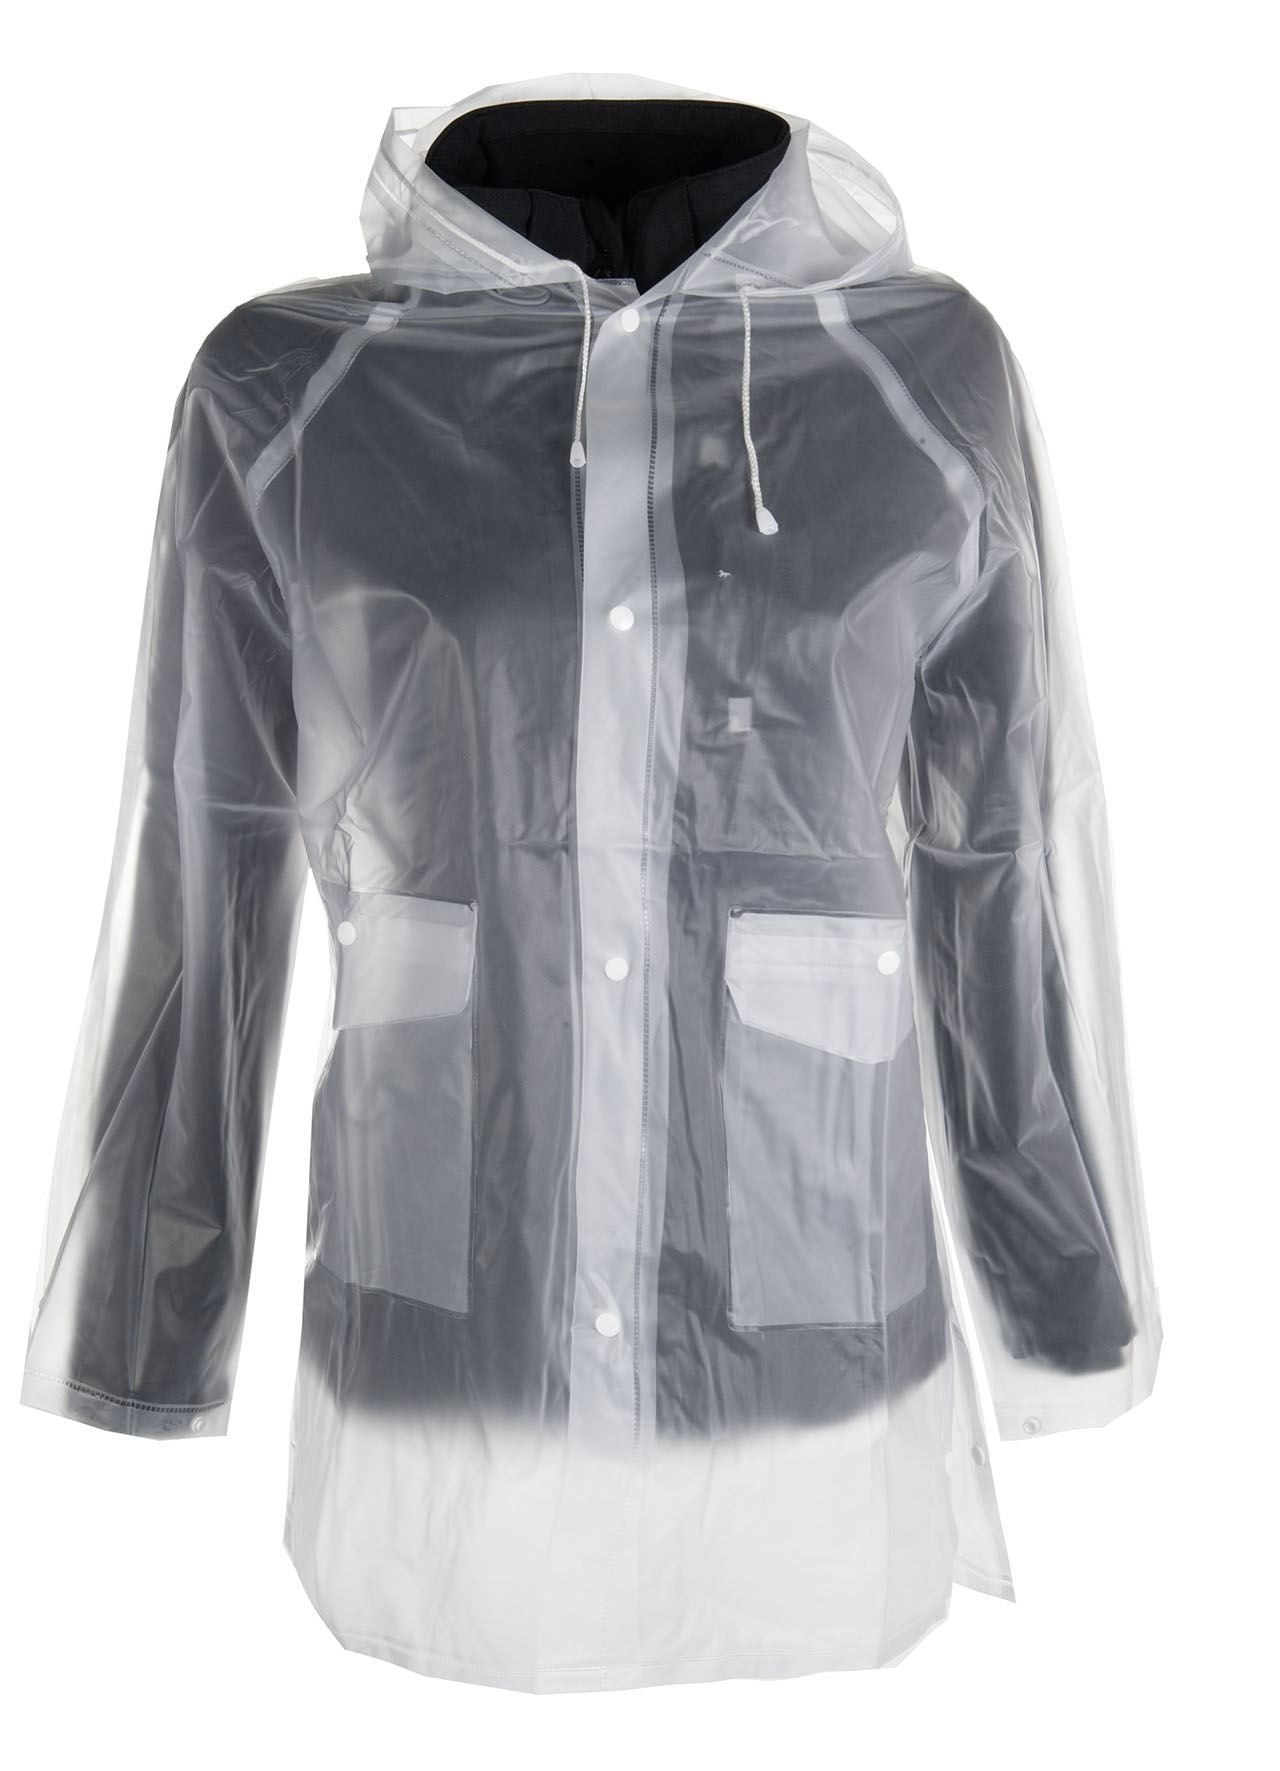 Transparent rain jacket.